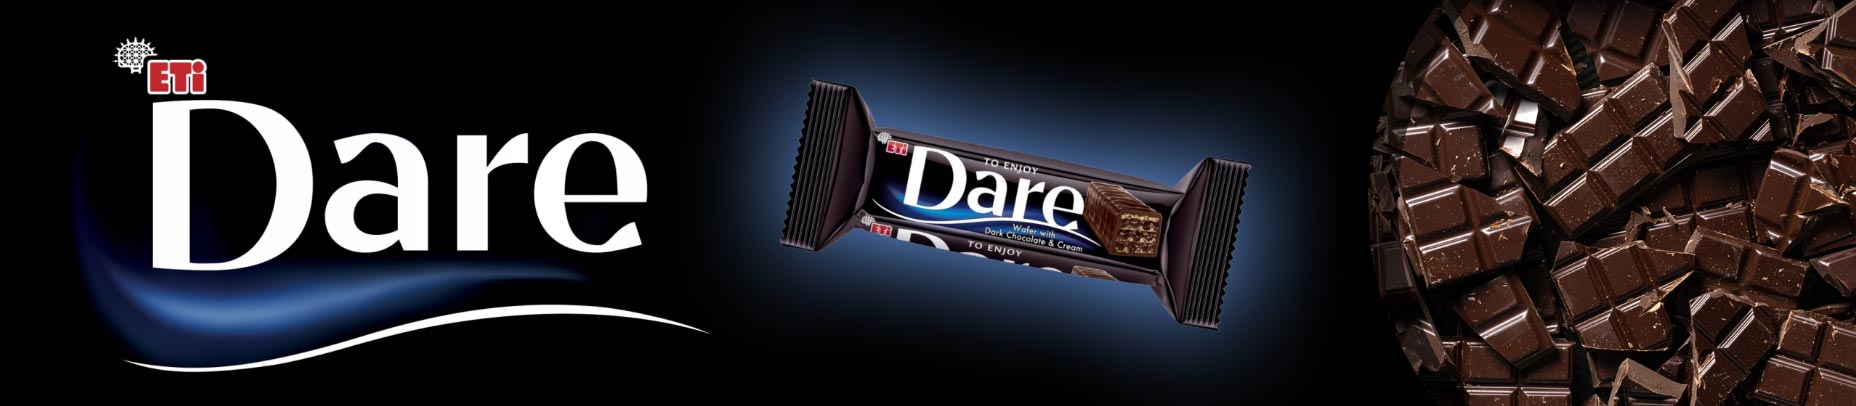 dare-dark-banner.jpg